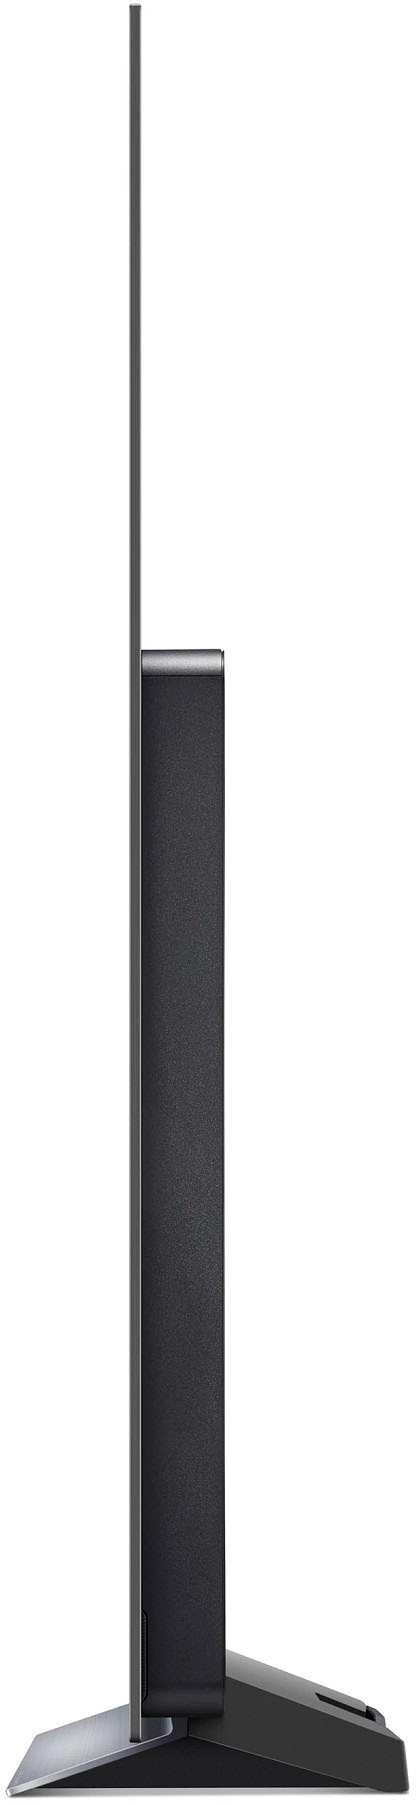 LG OLED C3 de 65 pulgadas por 1350 euros: por fin llega la oferta del Black